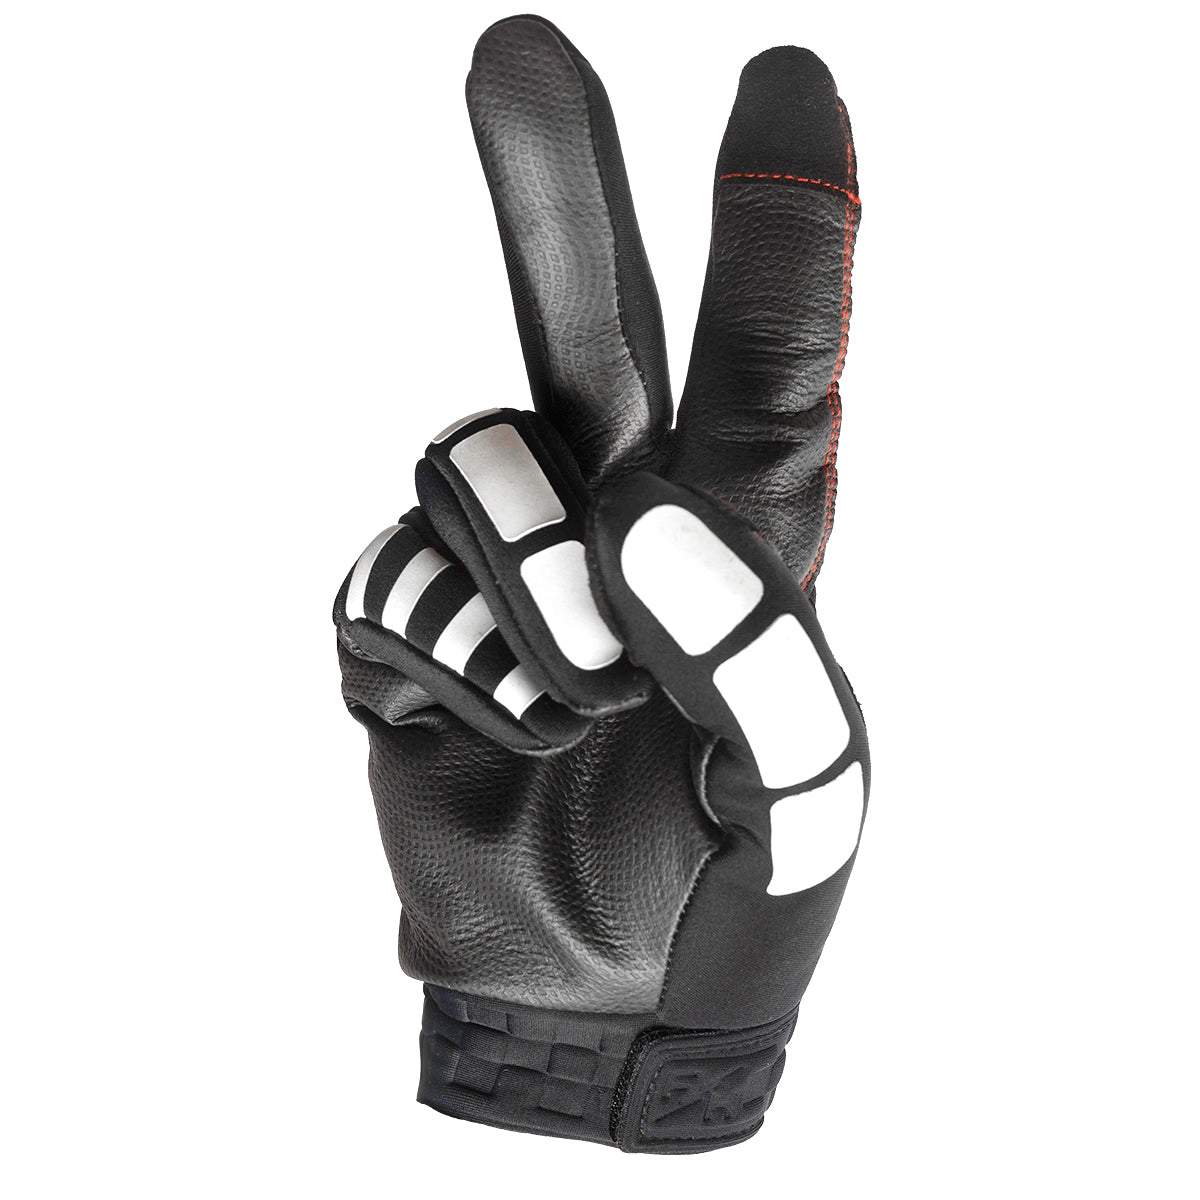 Toaster Glove - Black/White